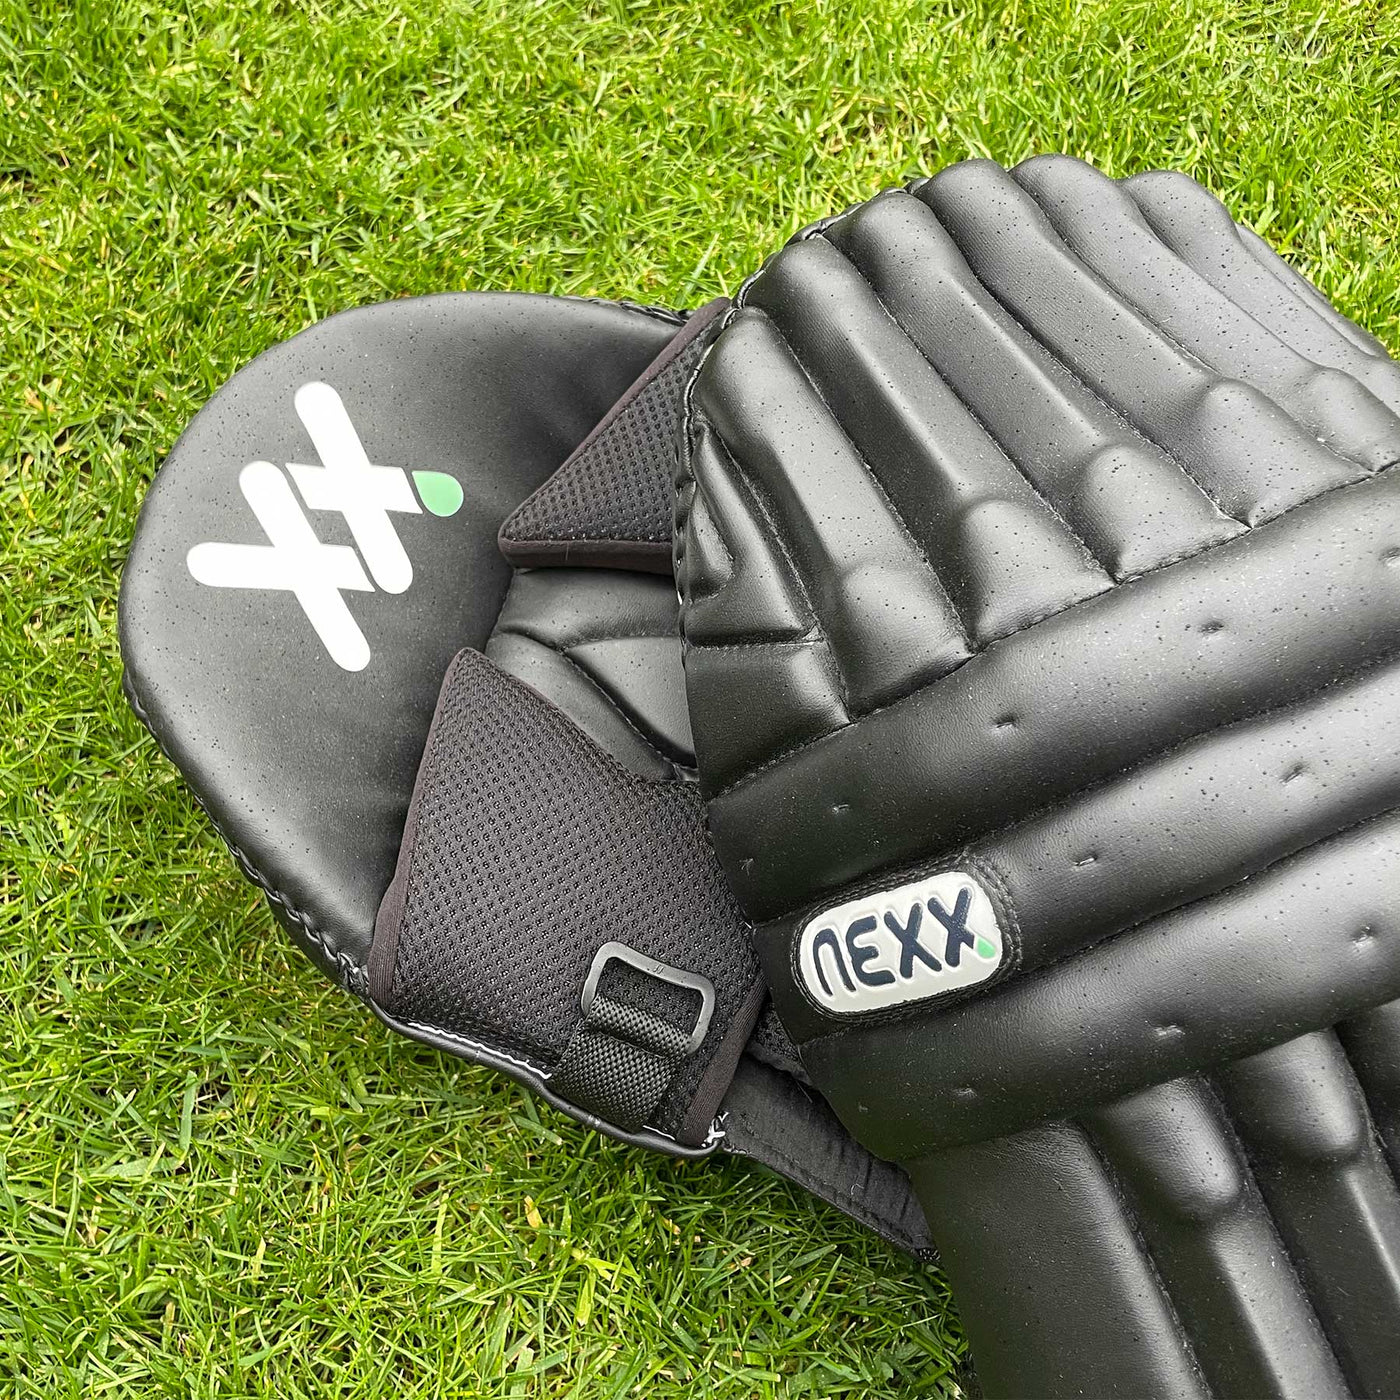 NEXX XX1 Women's Cricket Batting Pads - Black